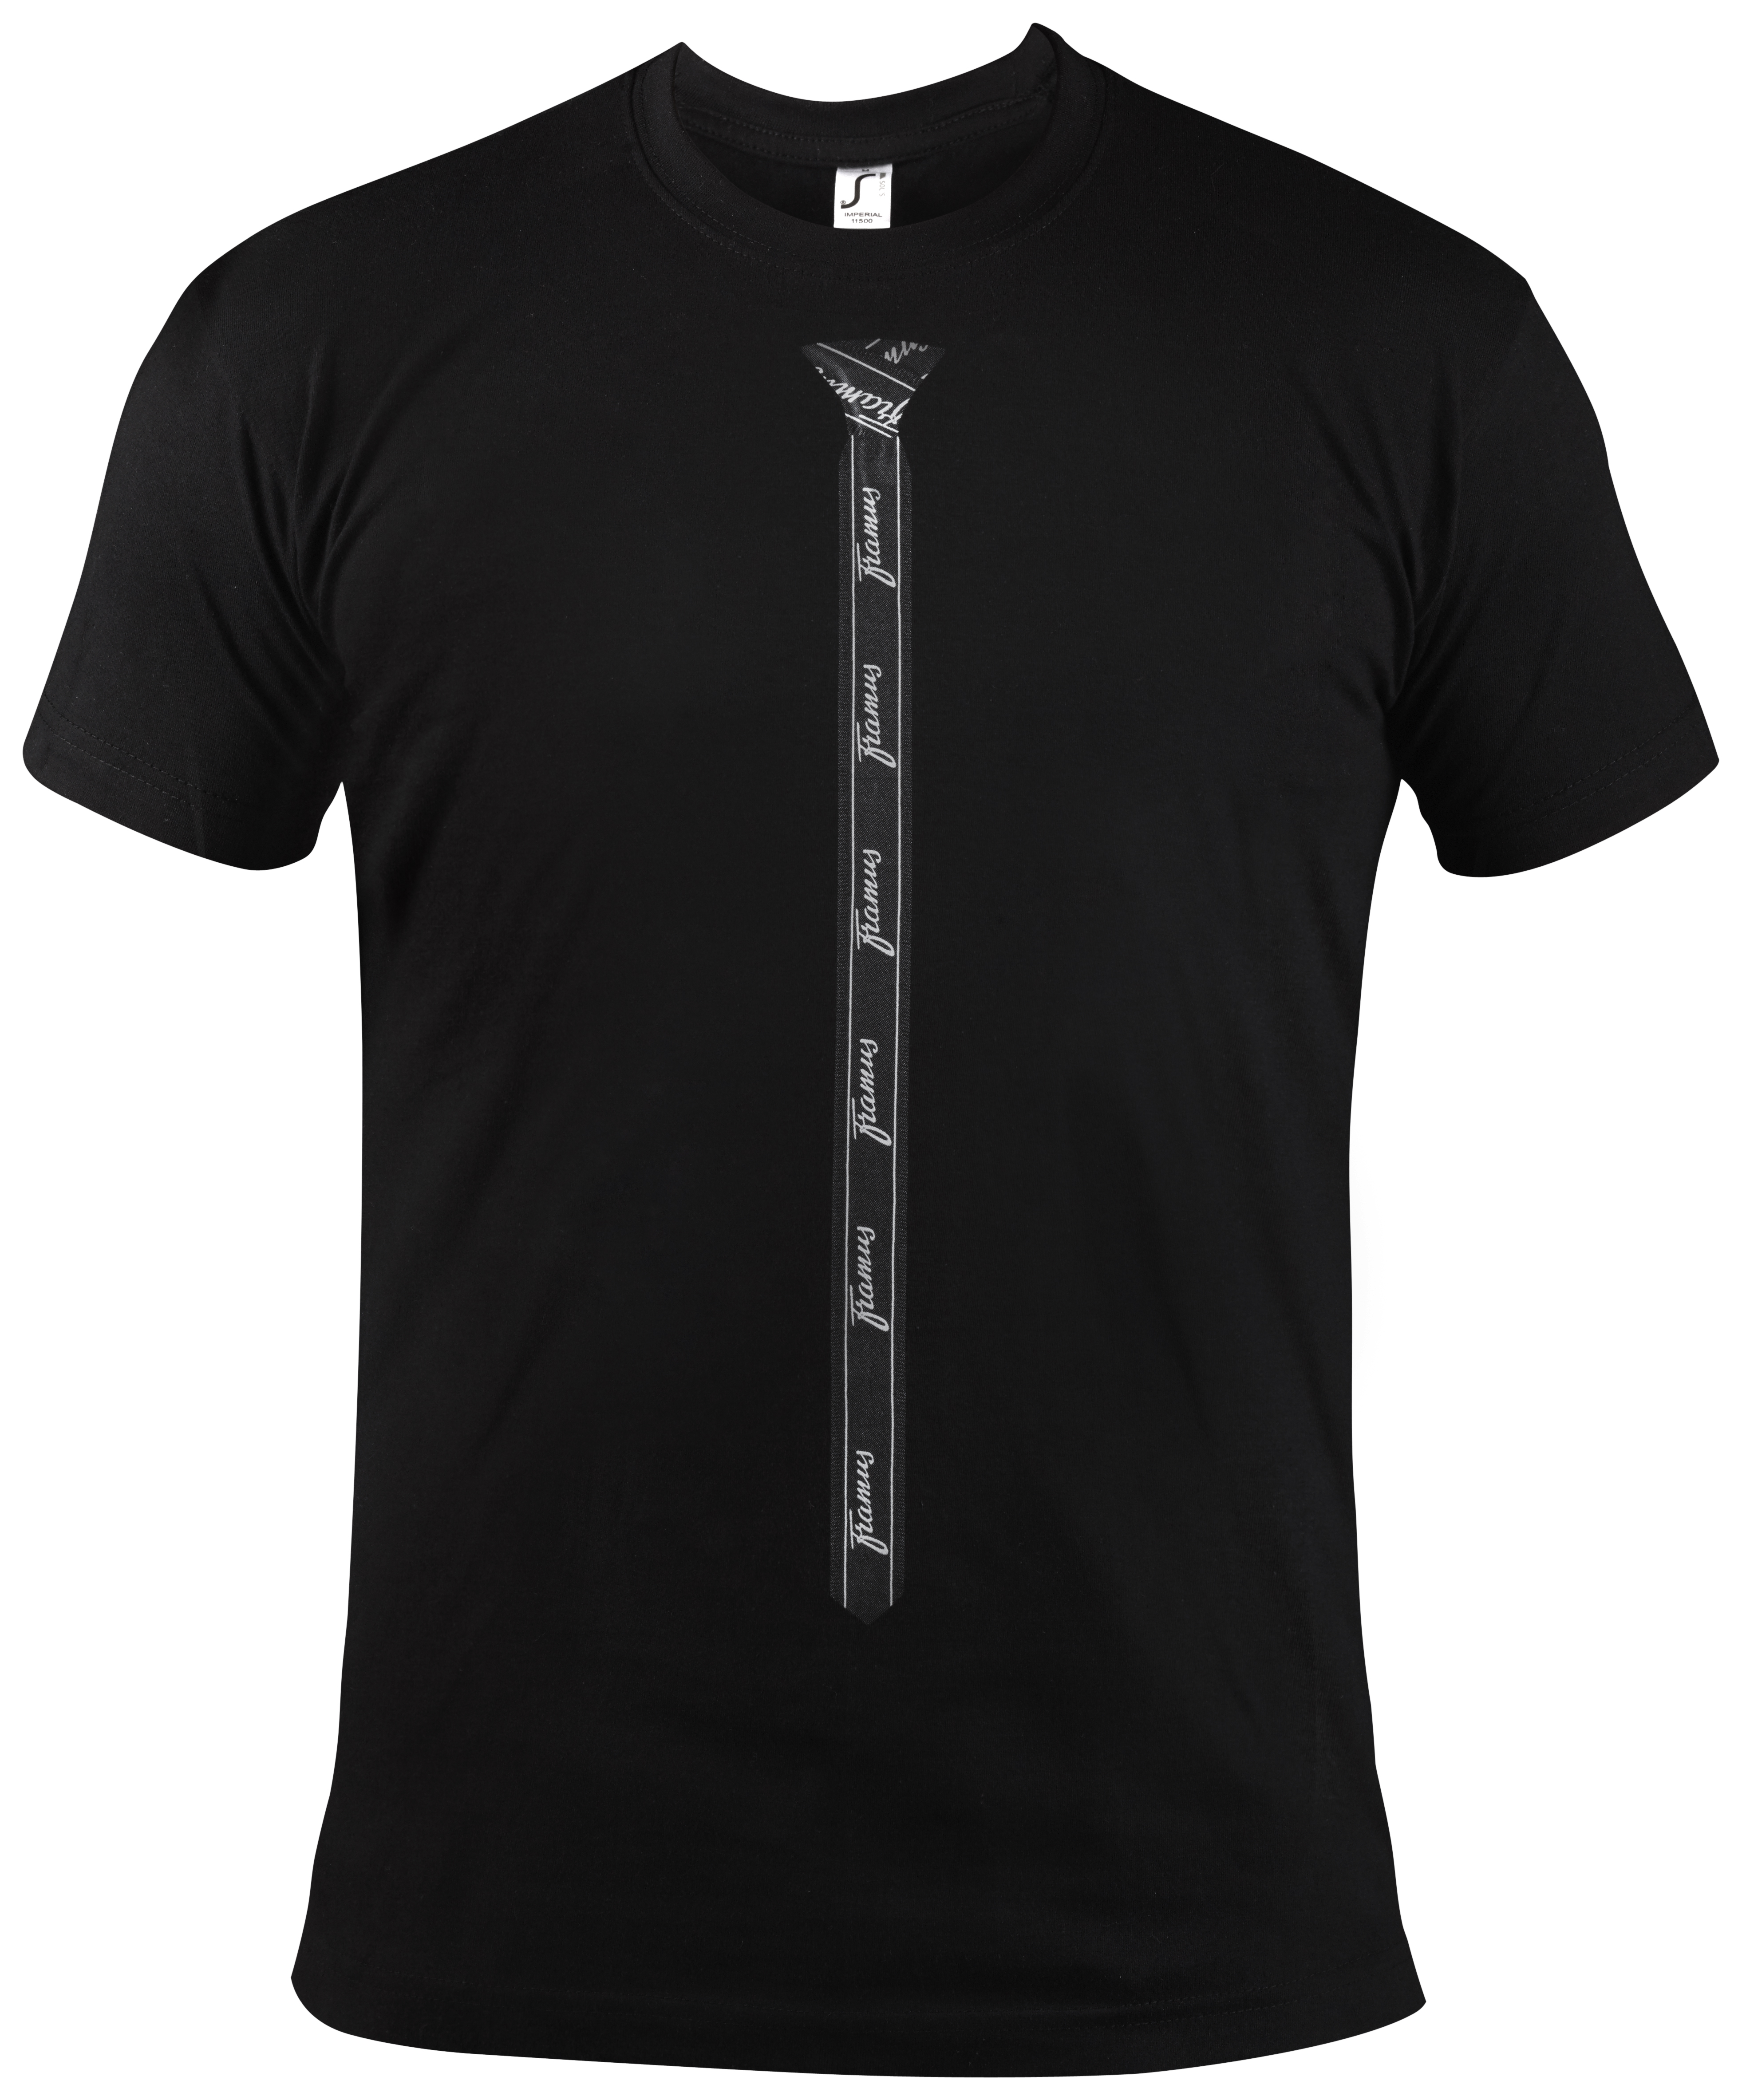 Framus Promo - Tie - T-Shirt - Female / Size S